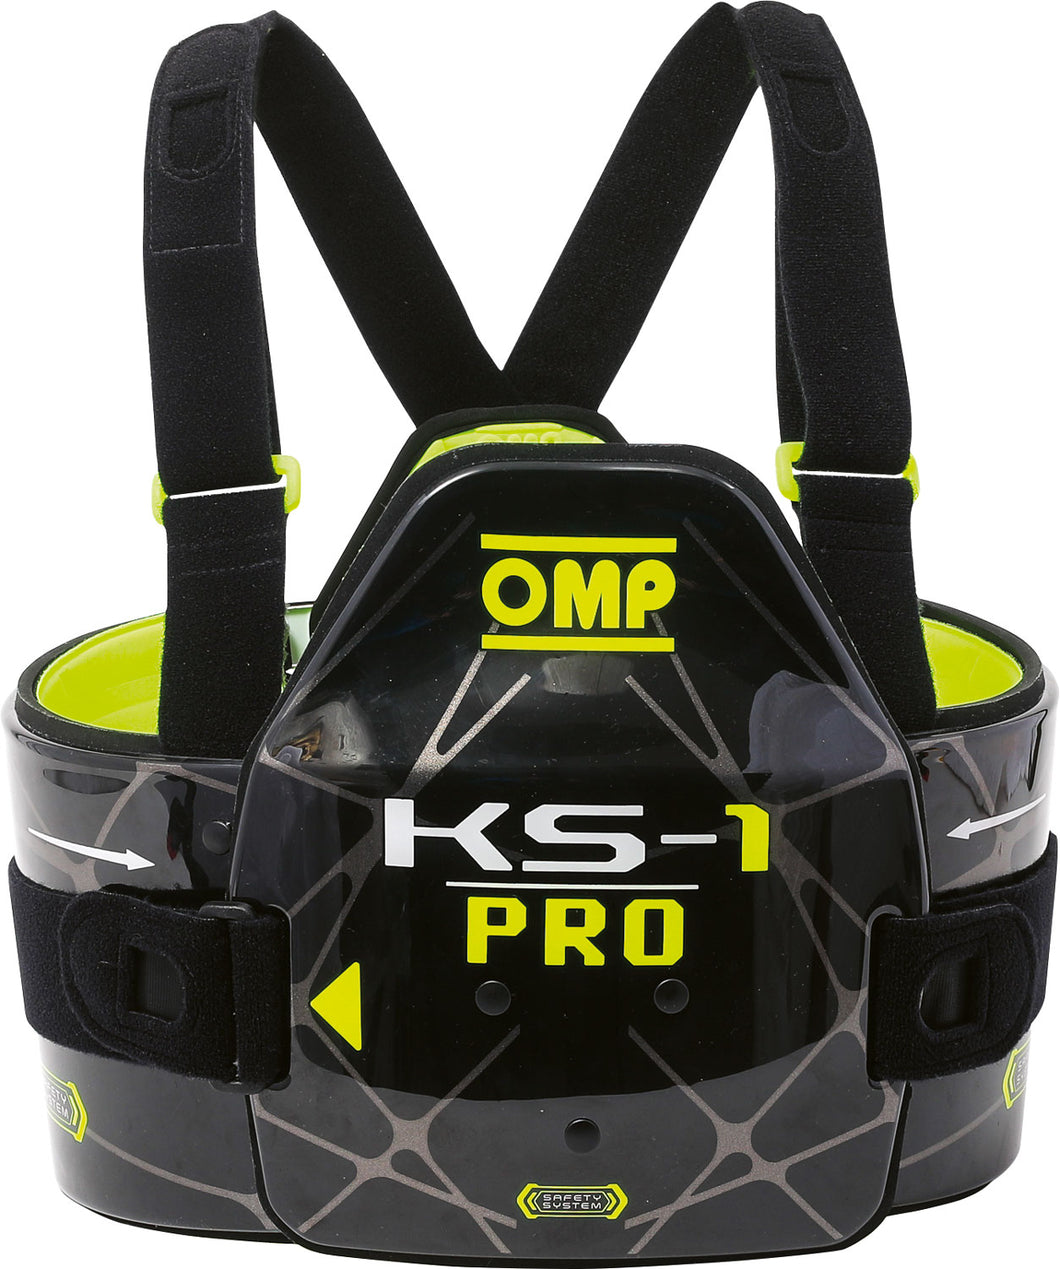 OMP protective vest KS-1 Pro